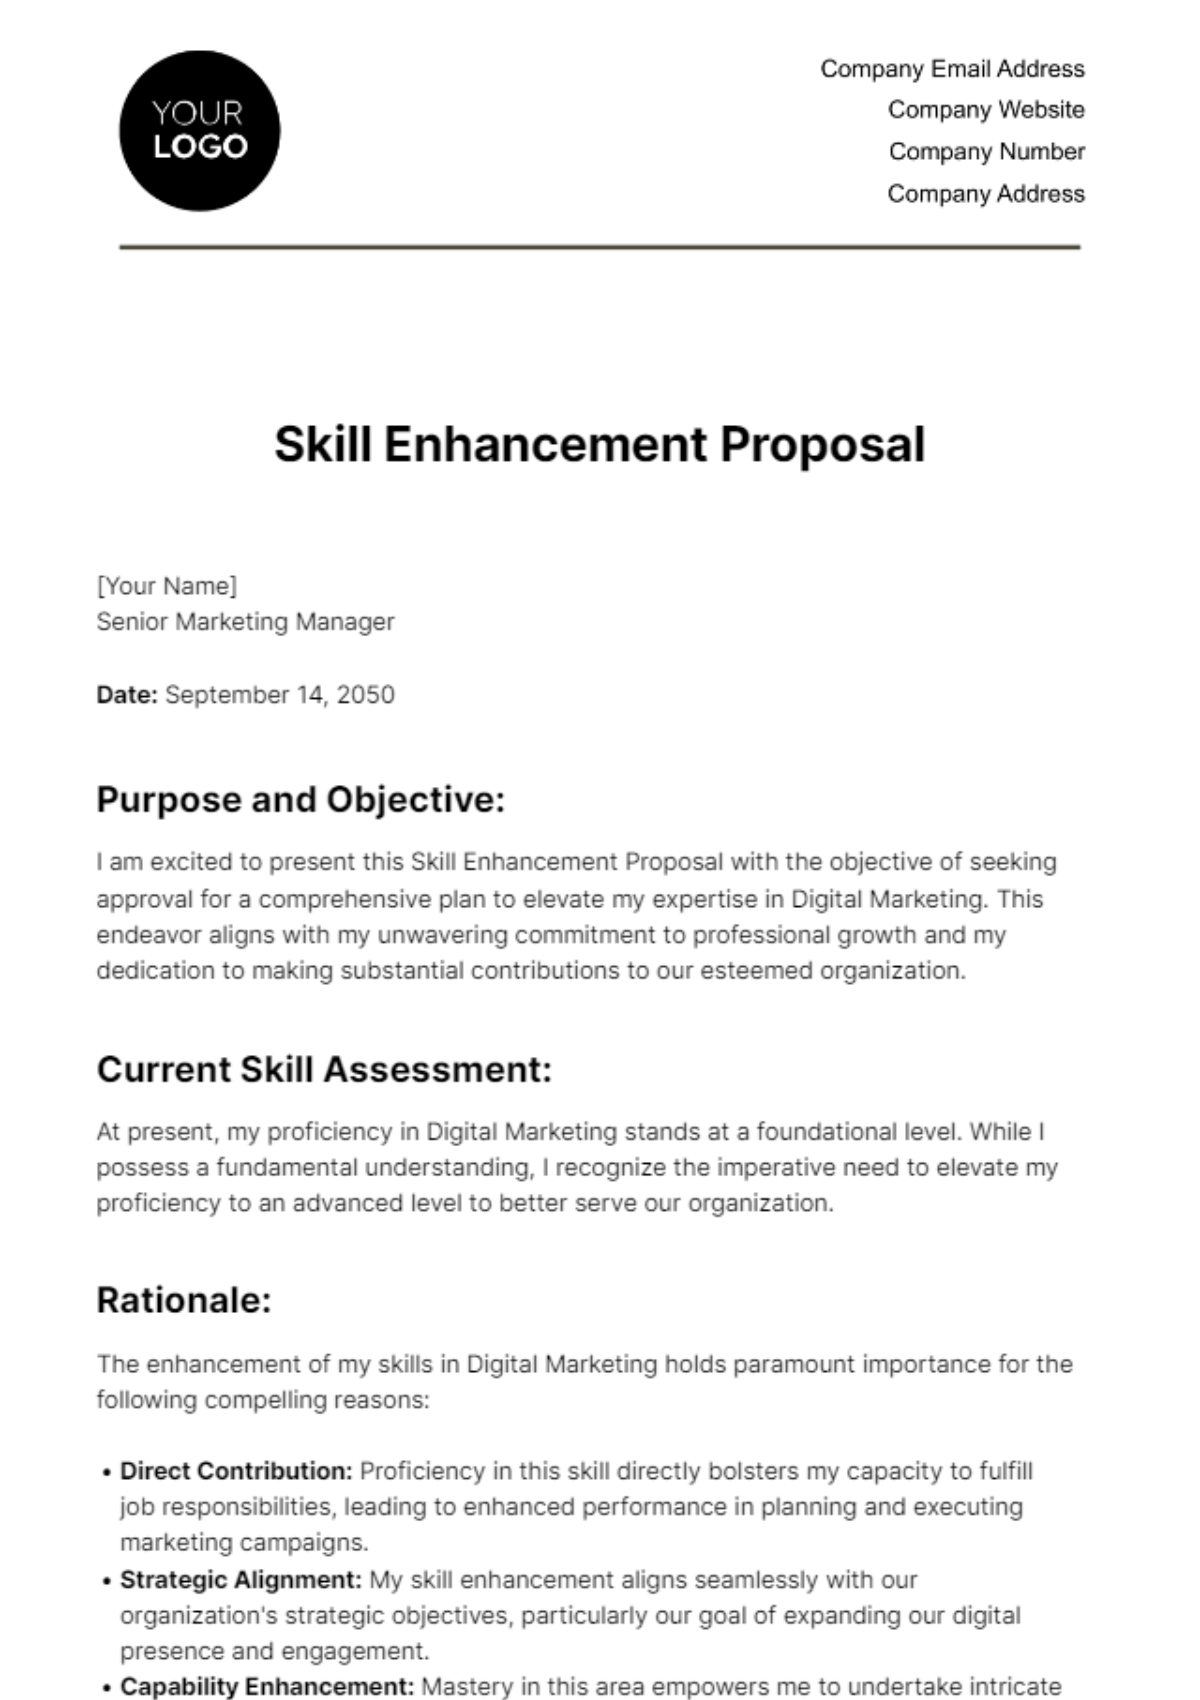 Free Skill Enhancement Proposal HR Template